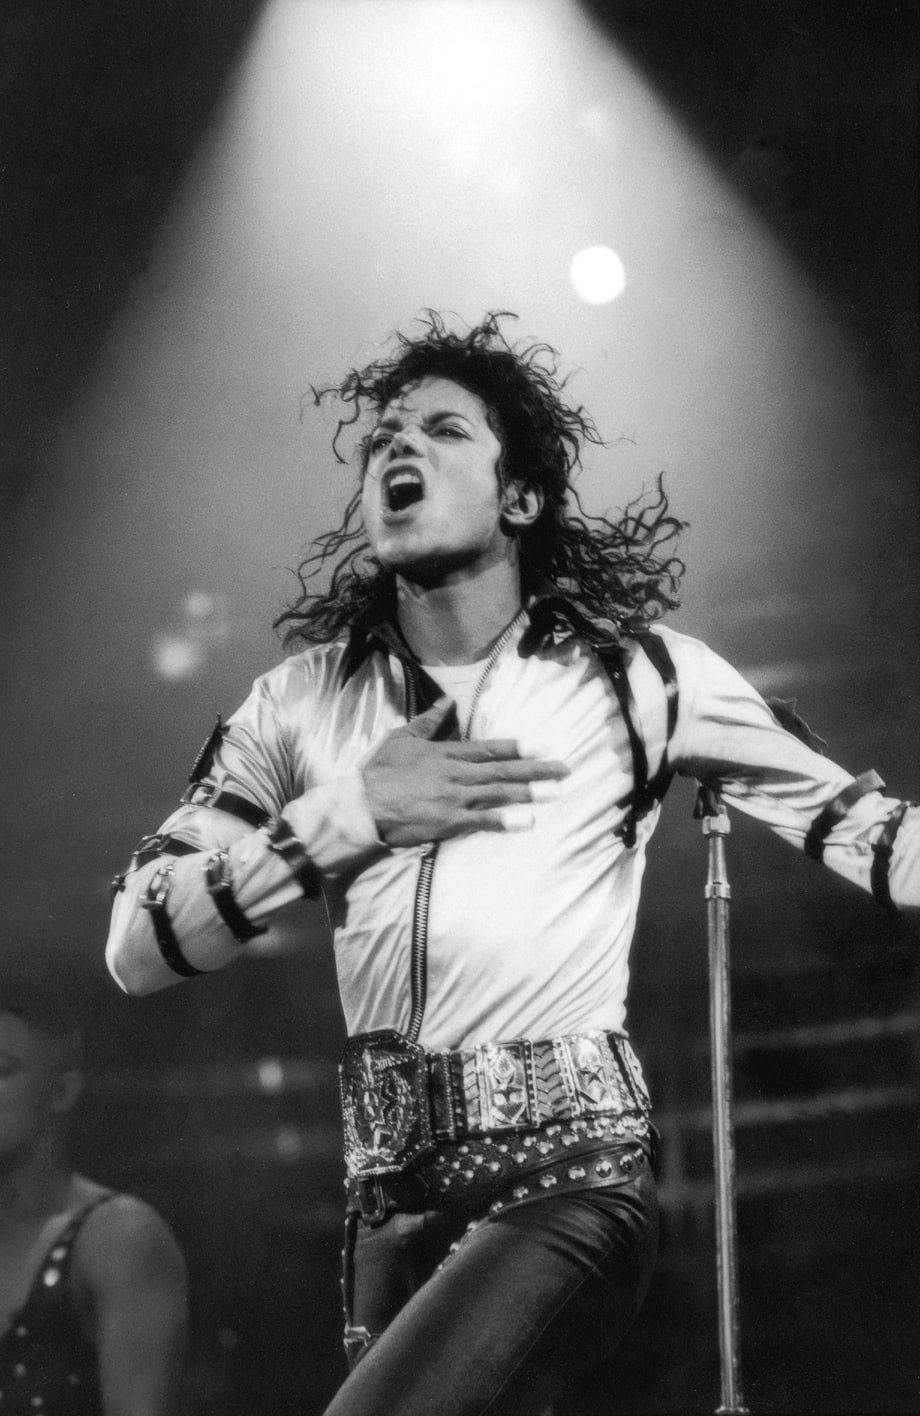 Michael Jackson Singles Chart